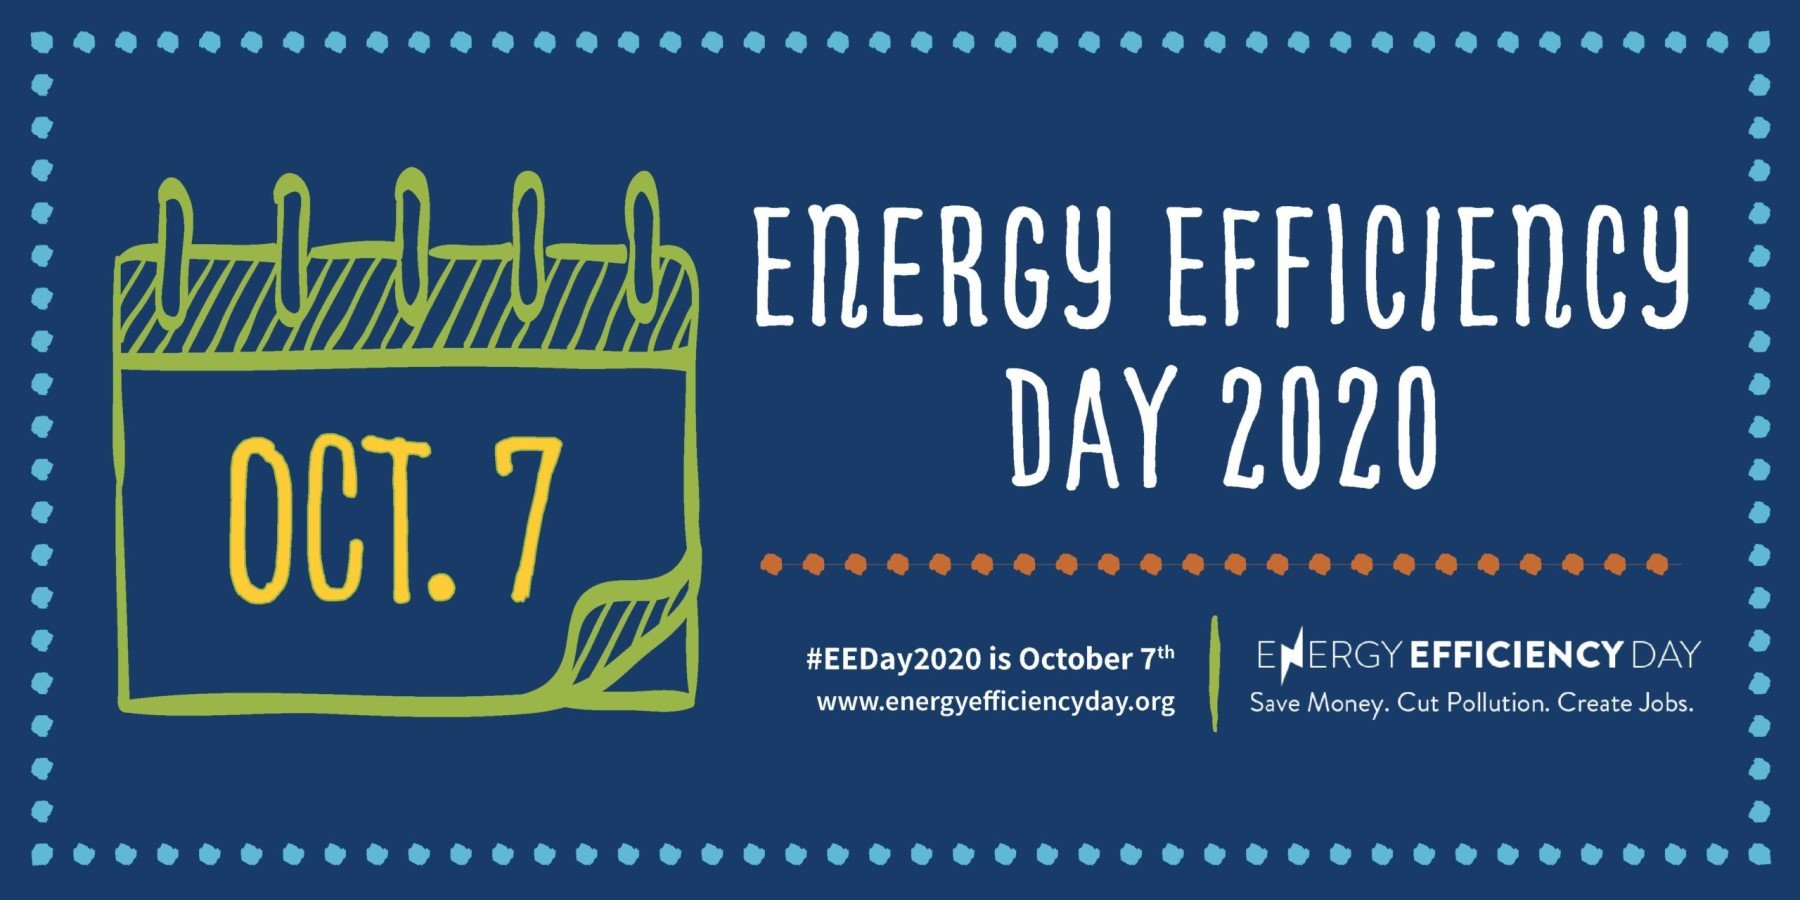 Celebrating Energy Efficiency Day